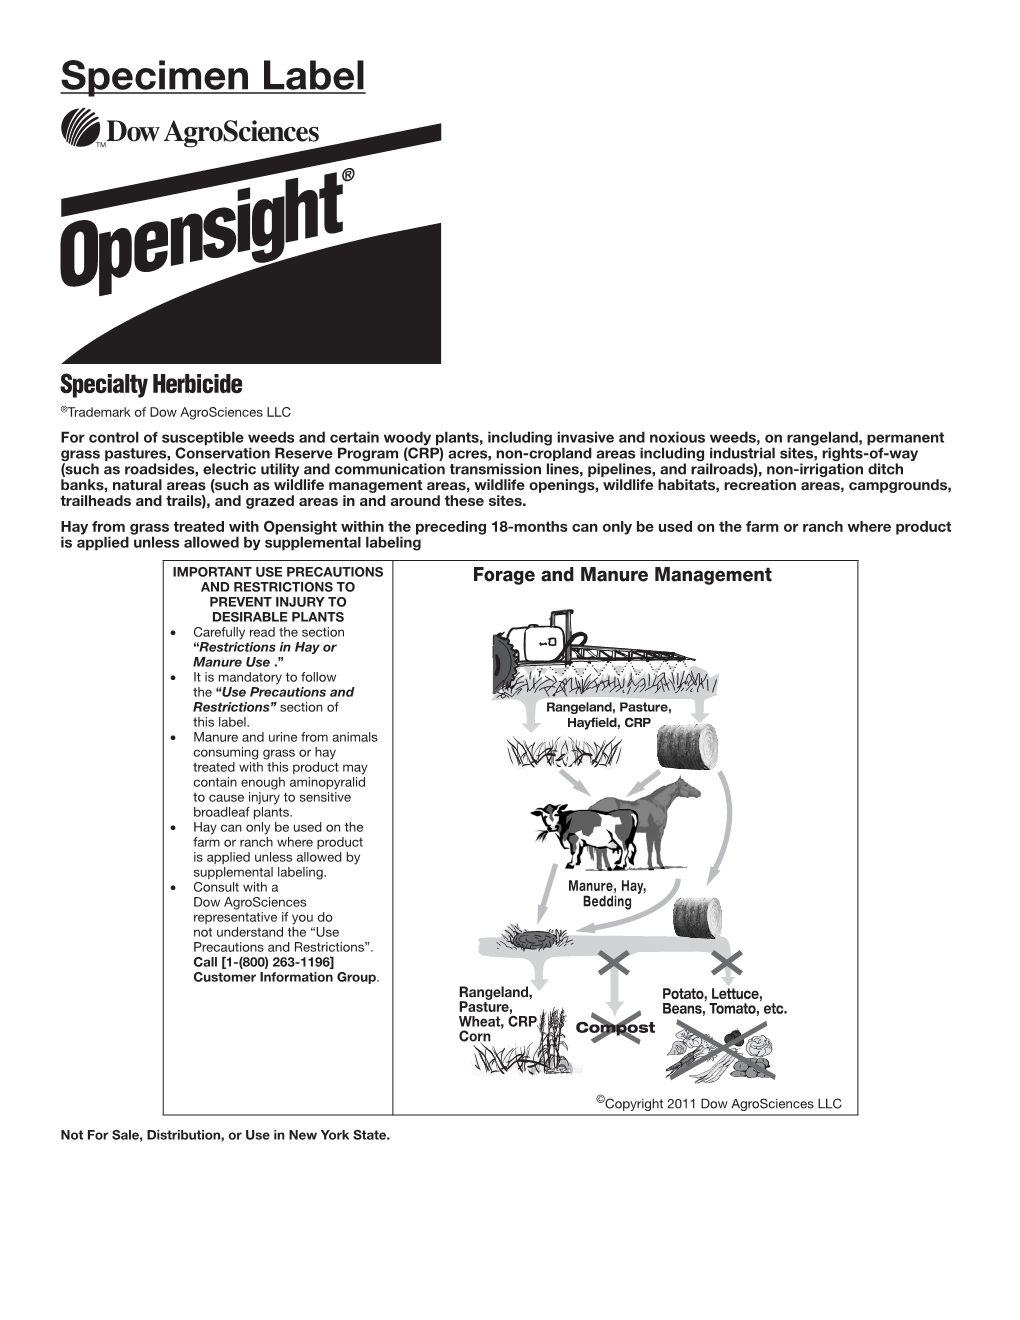 Opensight Label.Pdf